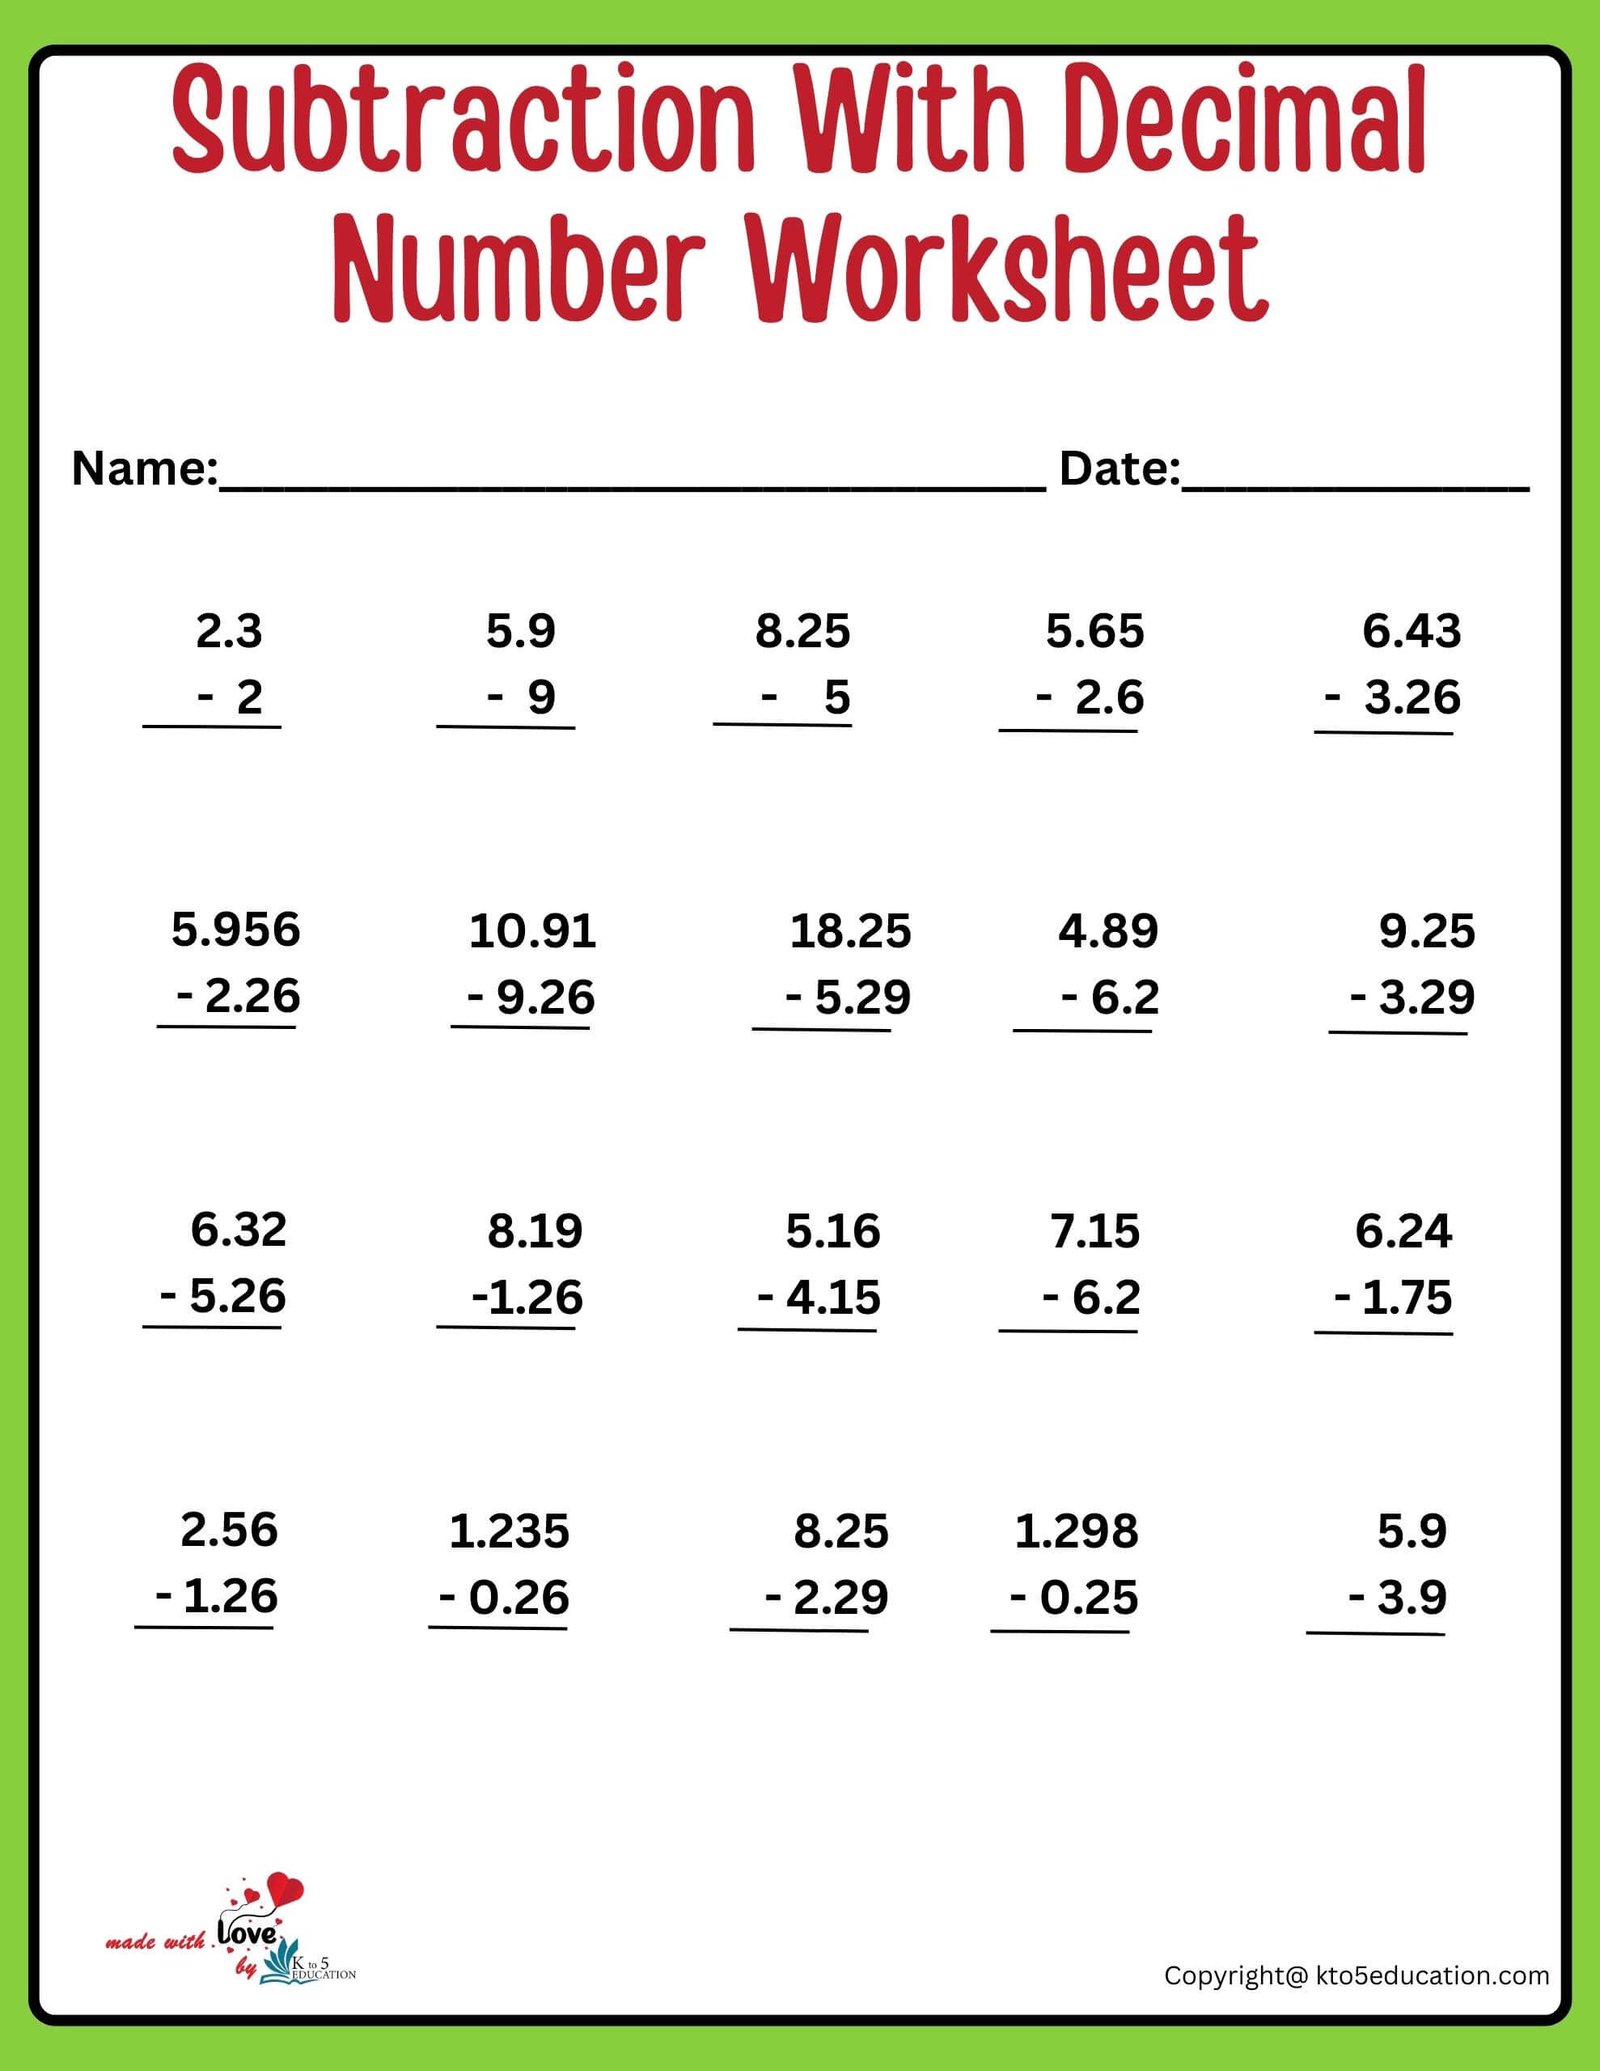 Free Subtraction With Decimal Number Online Activity Worksheet